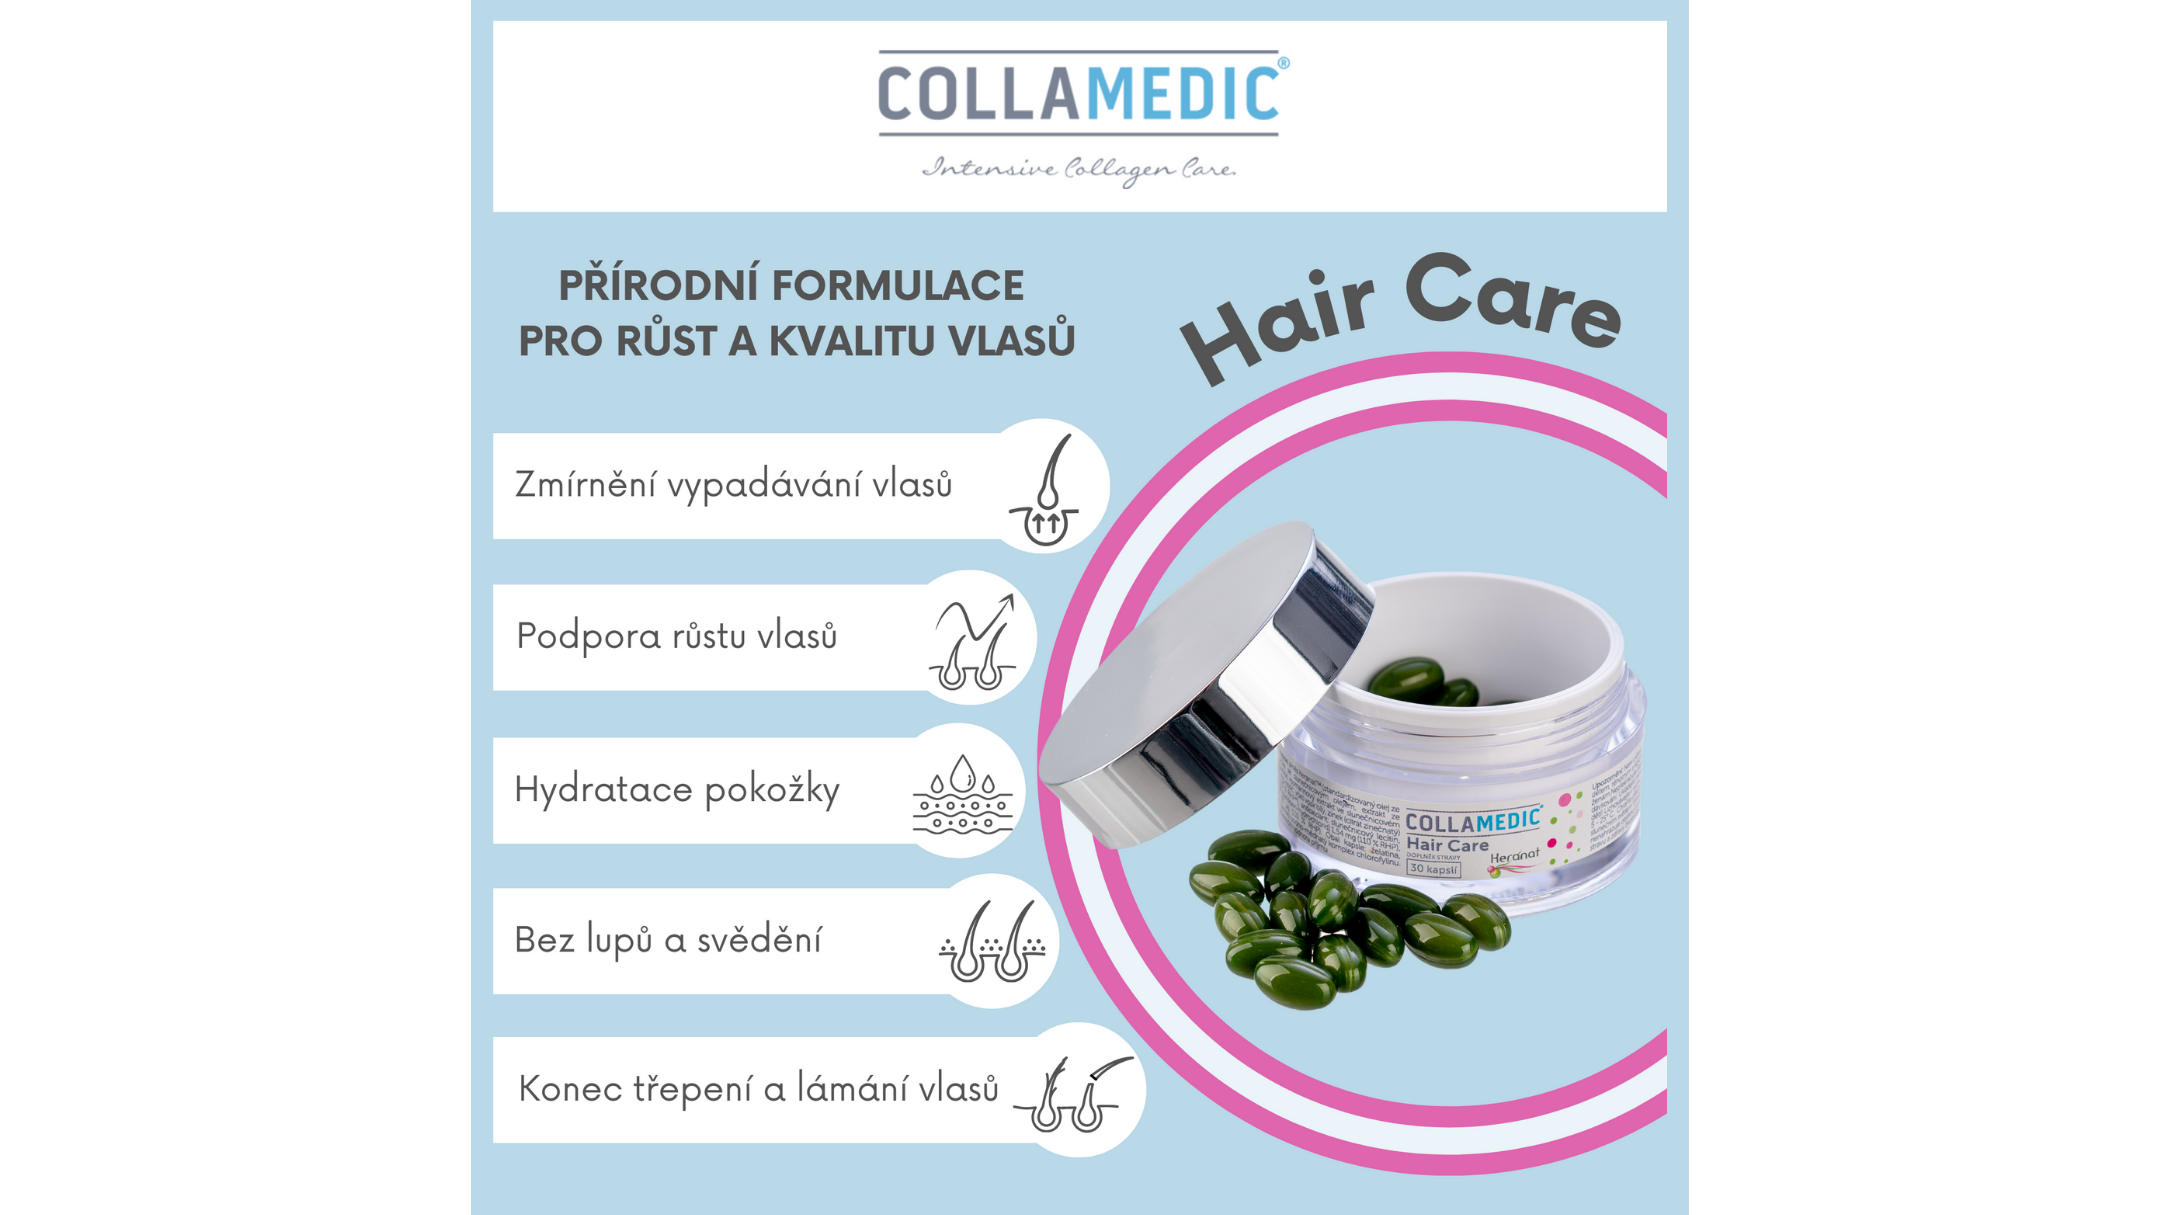 Collamedic Hair Care - péče o vlasy